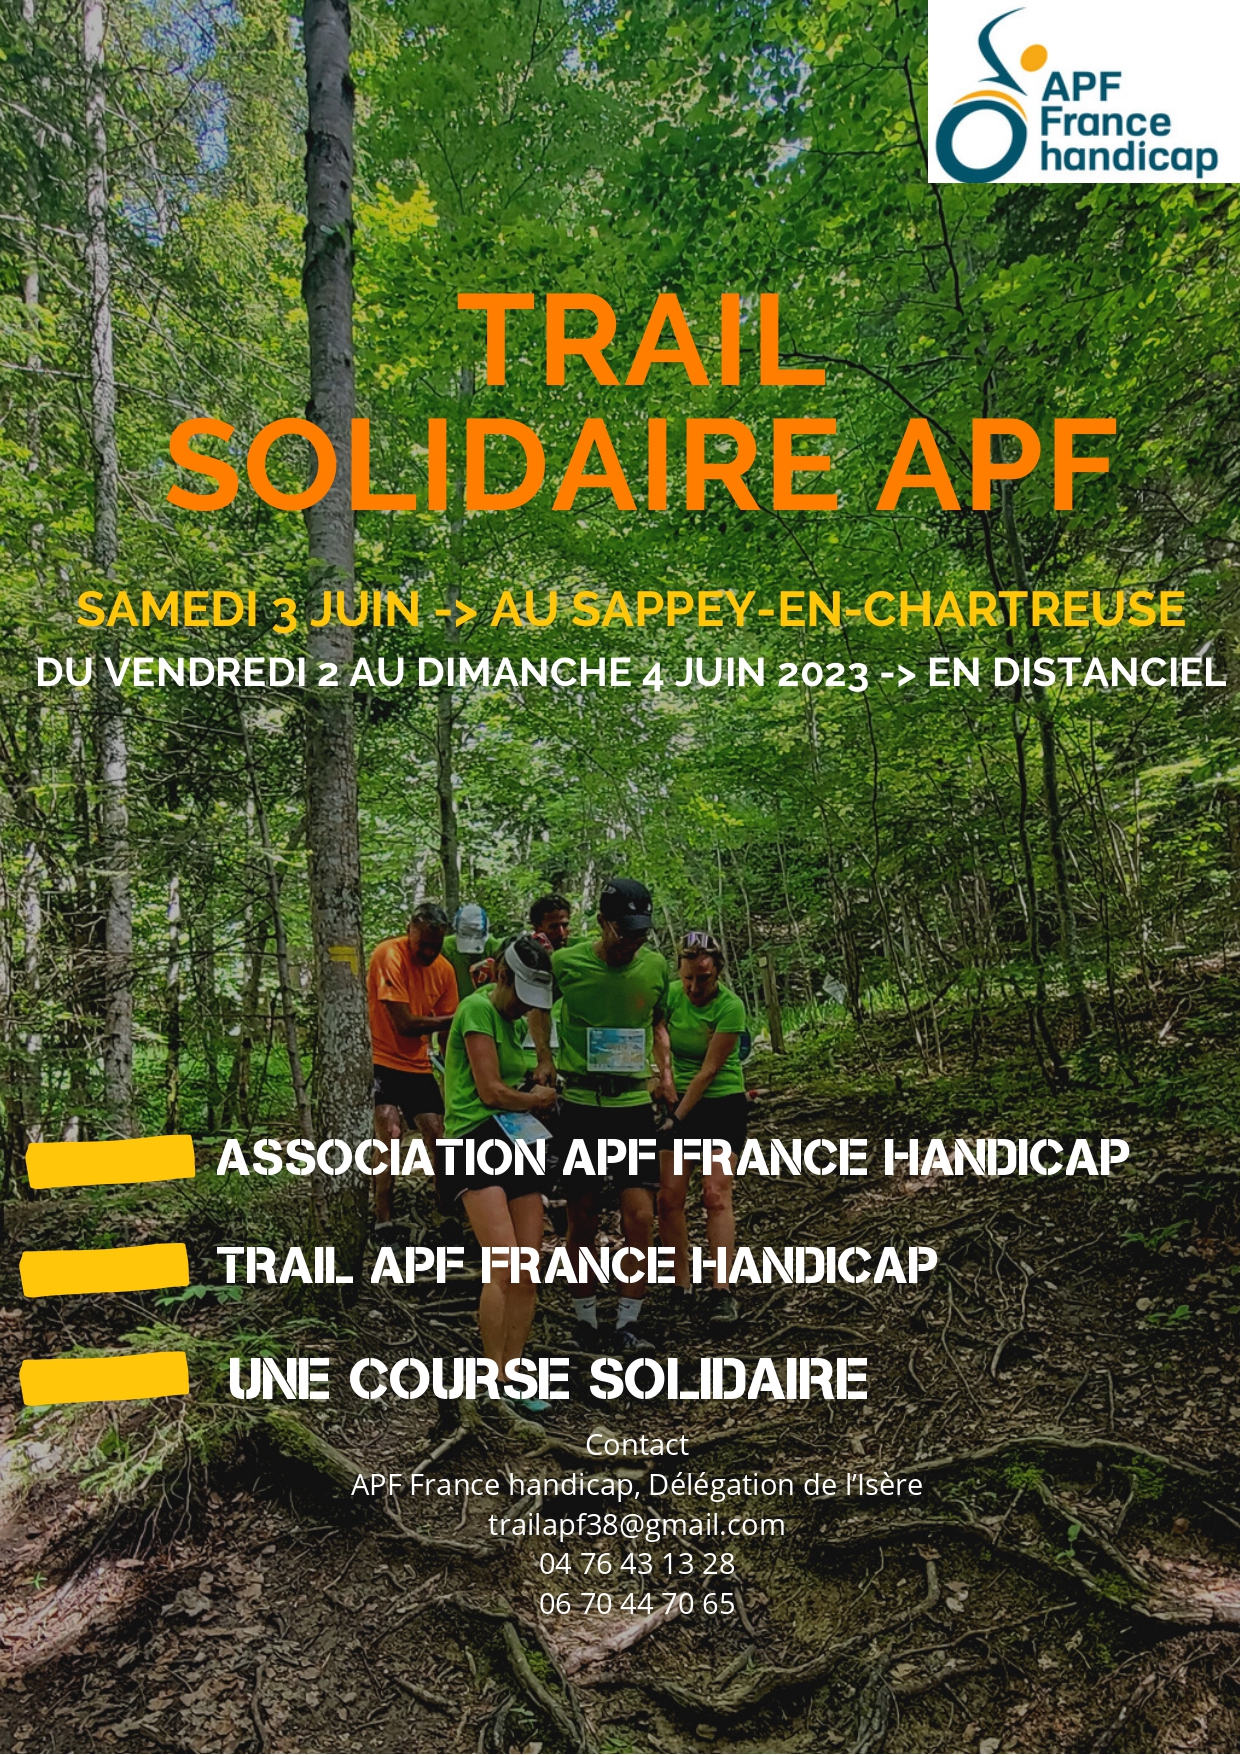 Trail Solidaire APF France handicap